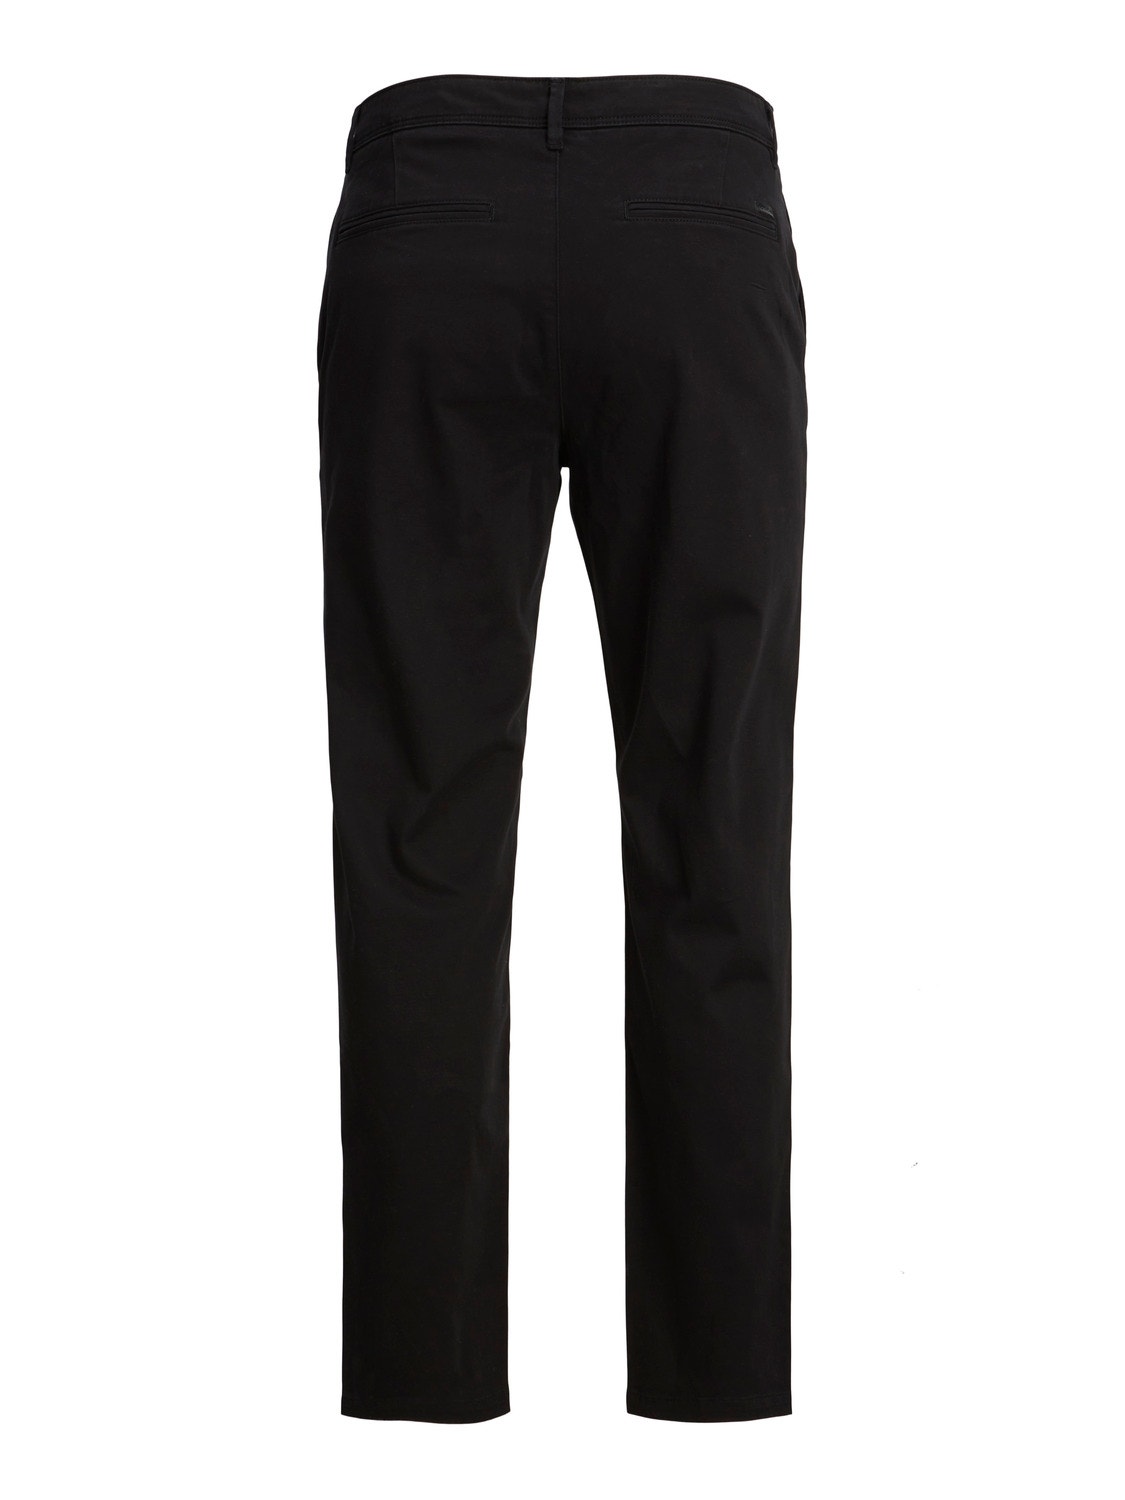 Jack & Jones Loose Fit Spodnie chino -Black - 12218622